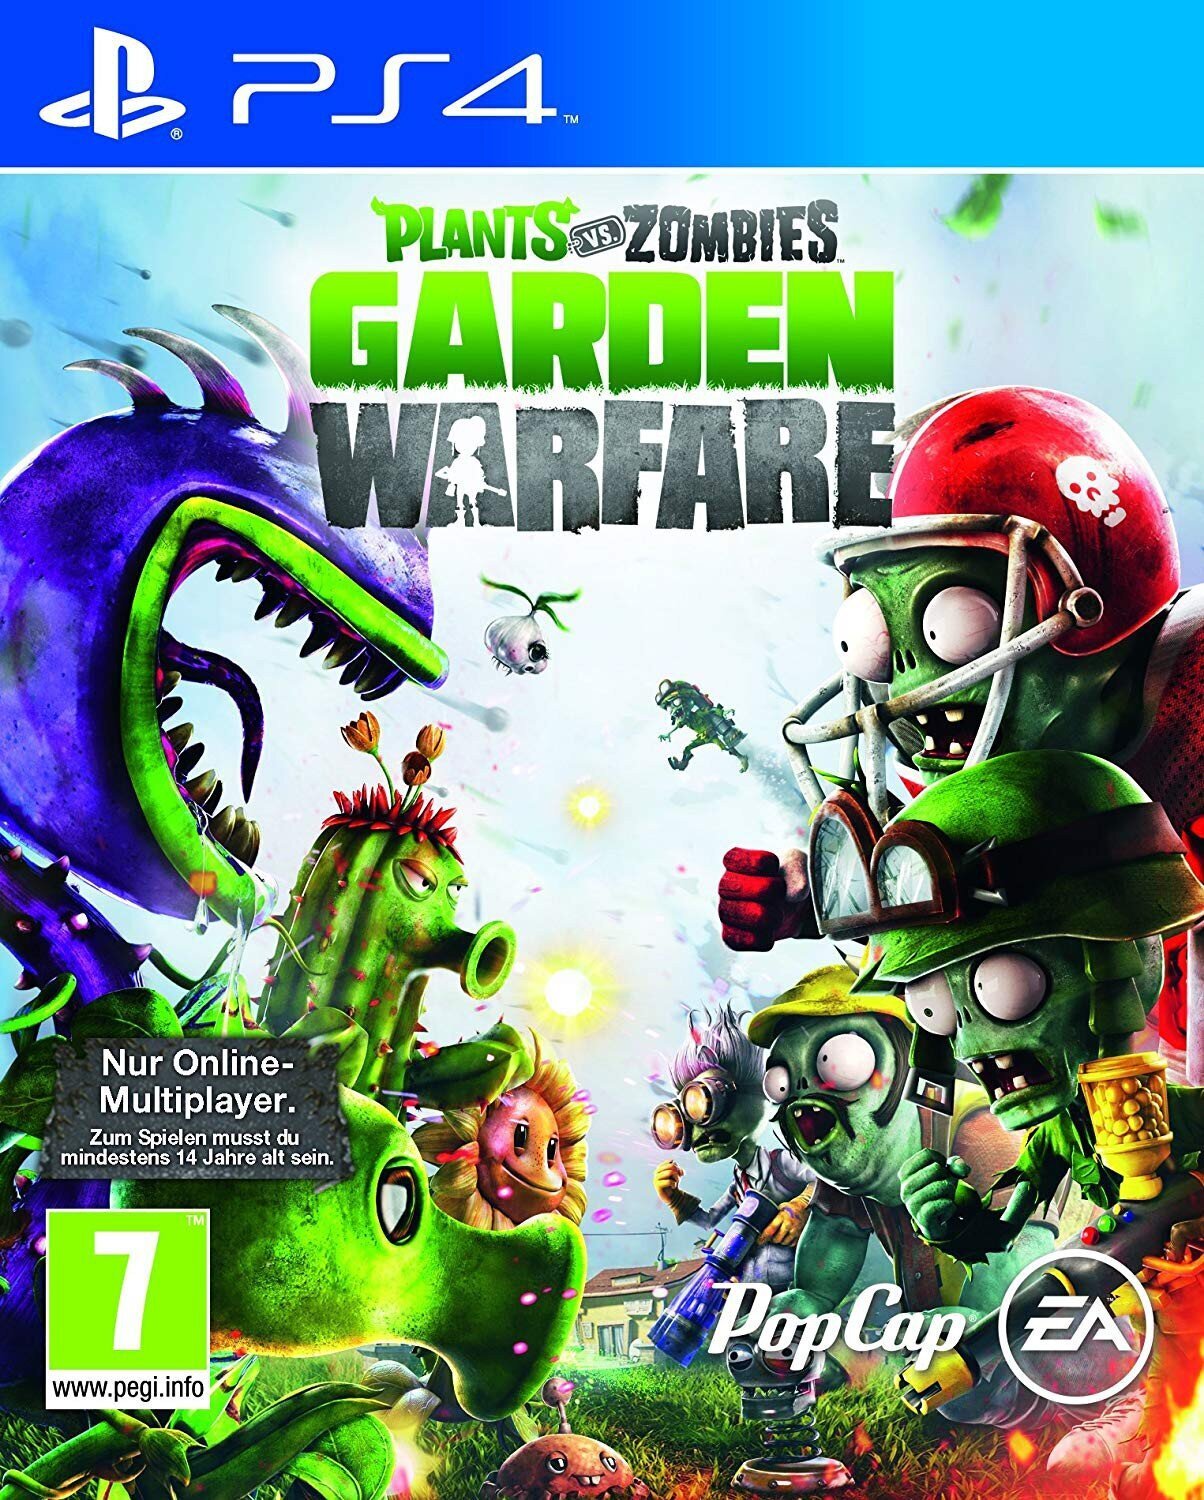 Videopeli PlayStation 4 peli : Plants vs. Zombies: Garden Warfare hinta |  